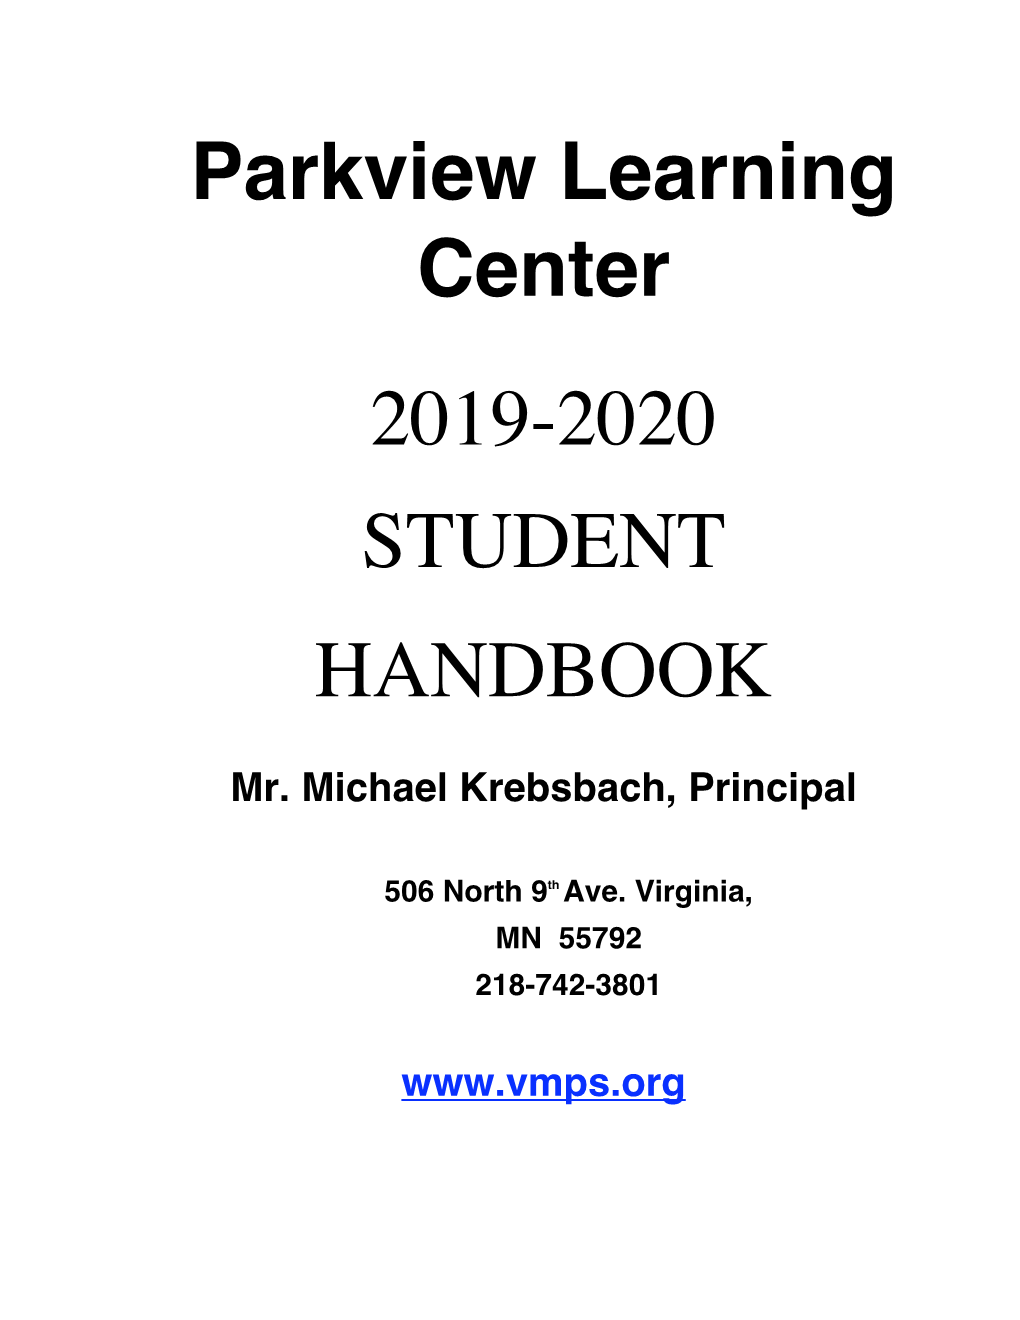 Parkview Student Handbook 2019-2020